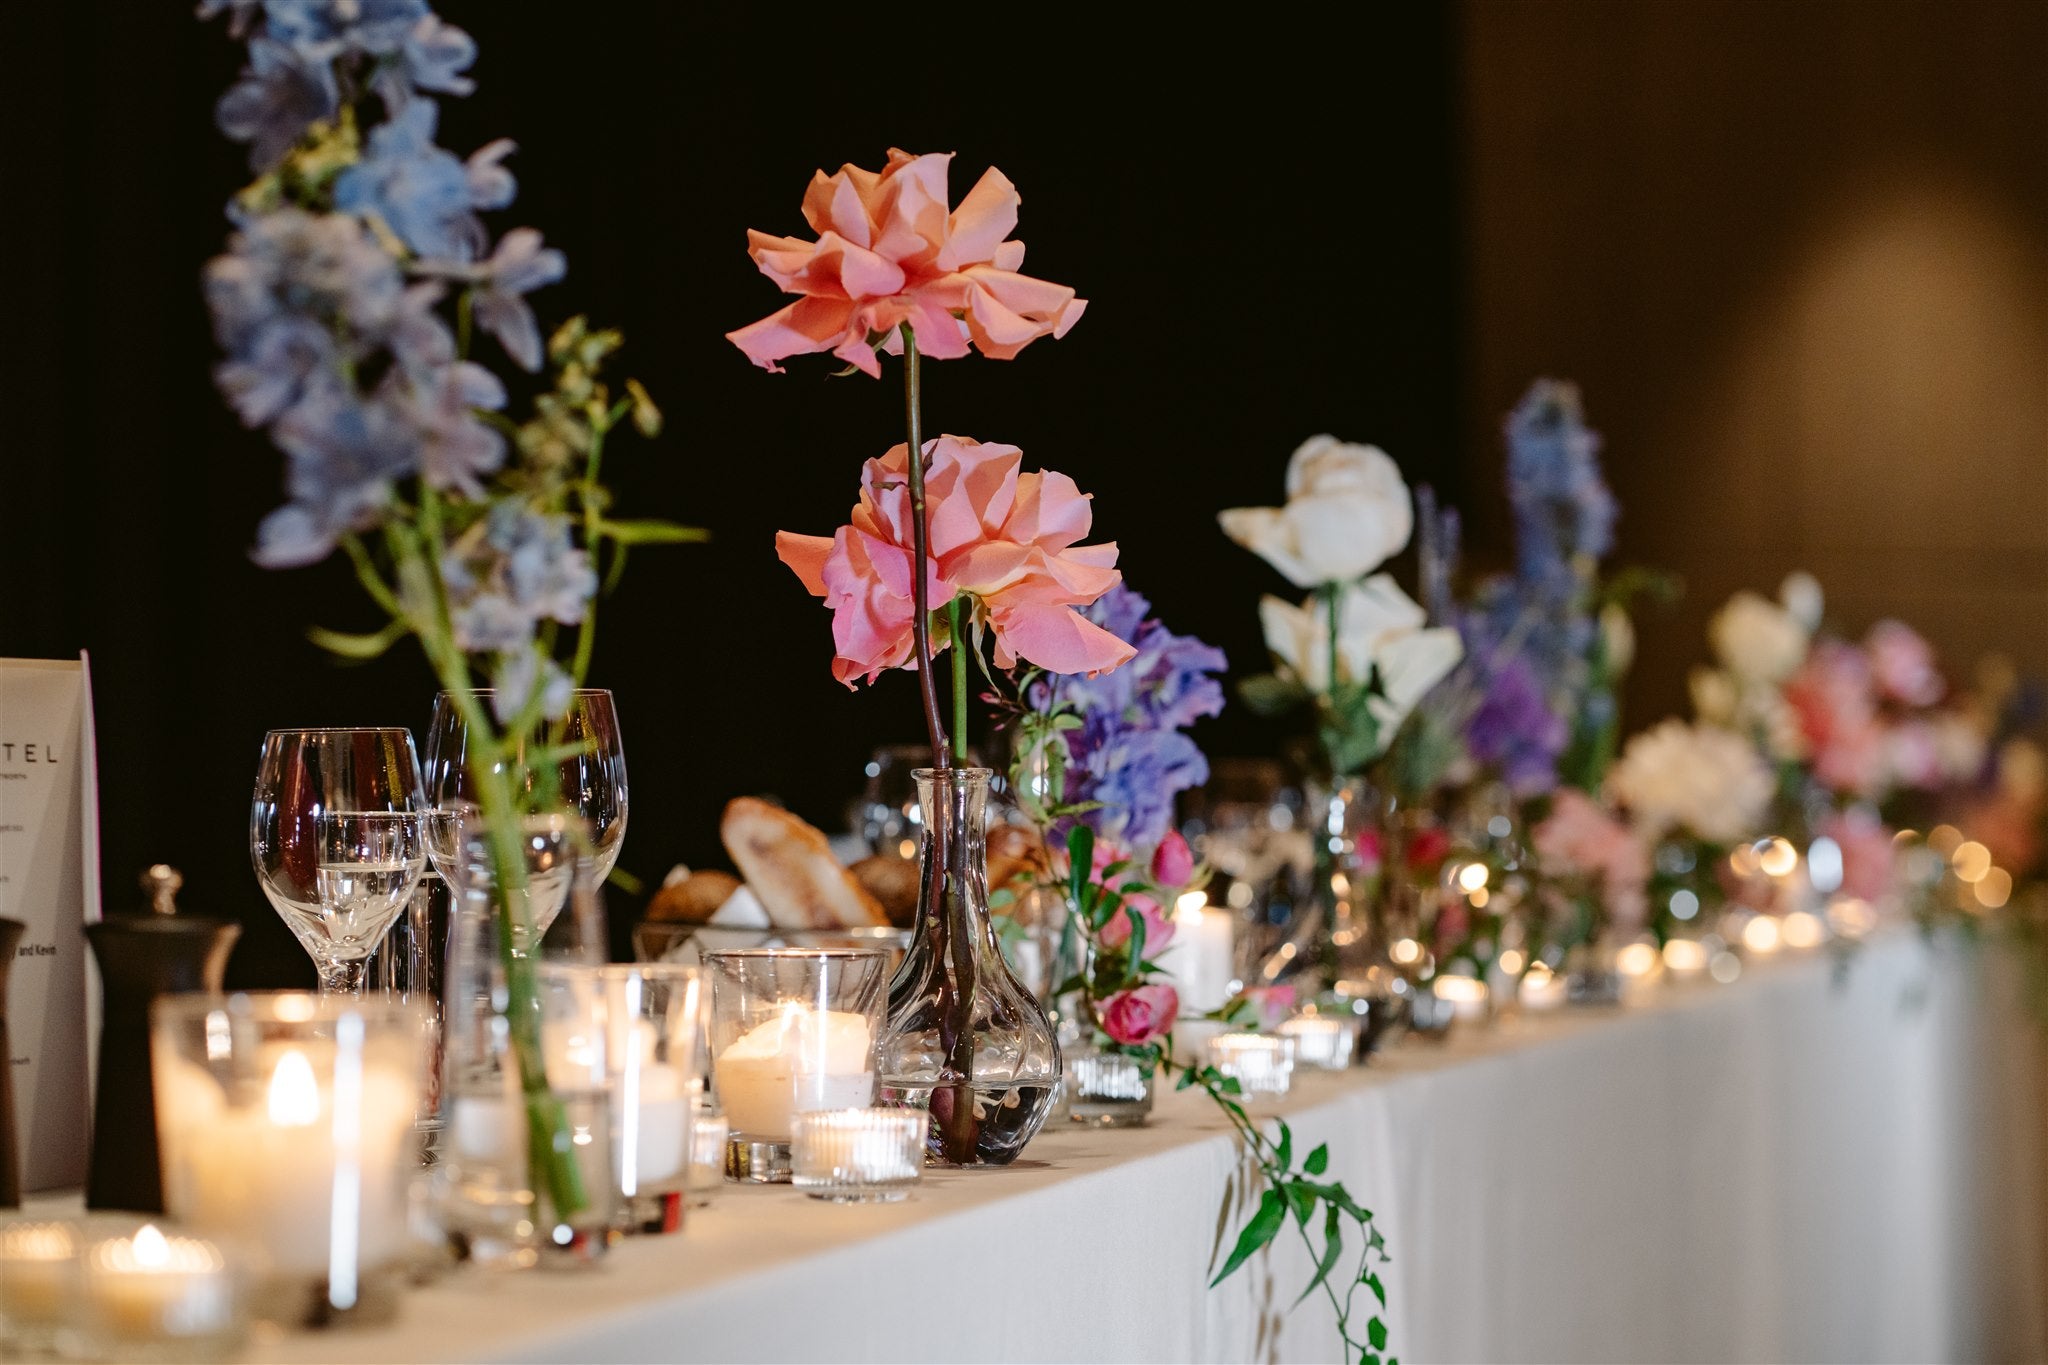 sofitel sydney wedding reception flowers